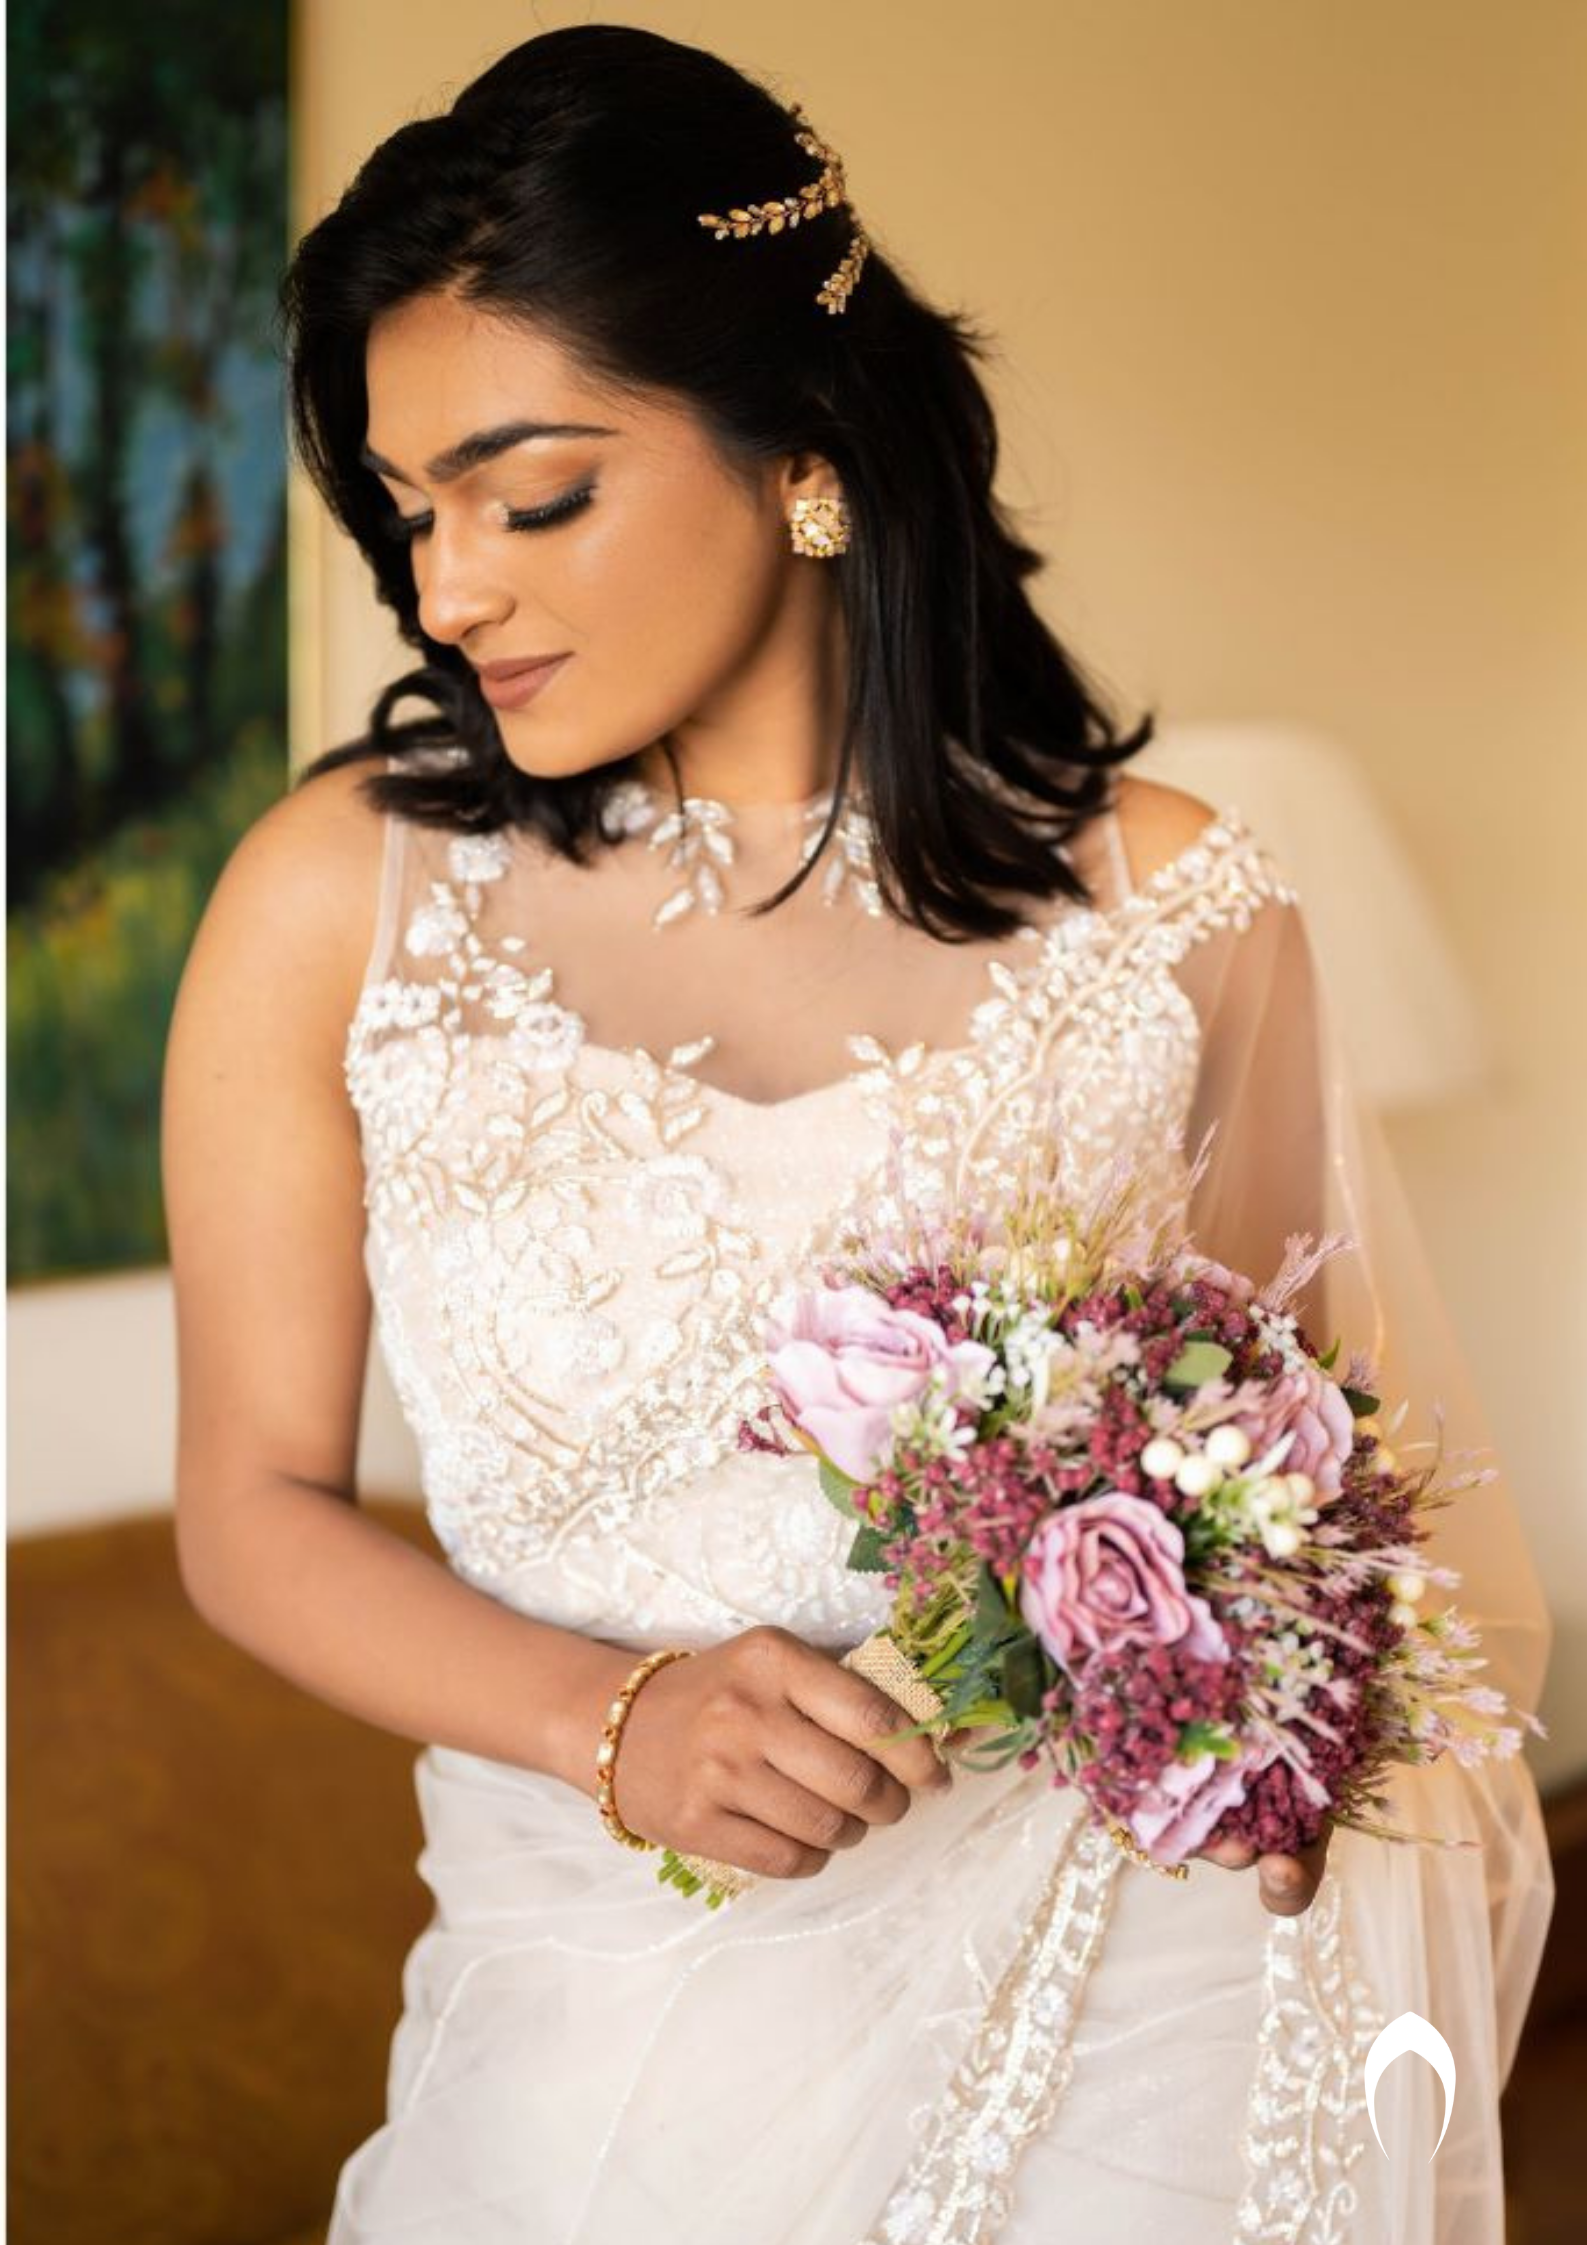 D'Aisle bridals | Christian bride, Christian wedding dress, Romantic wedding  dress lace